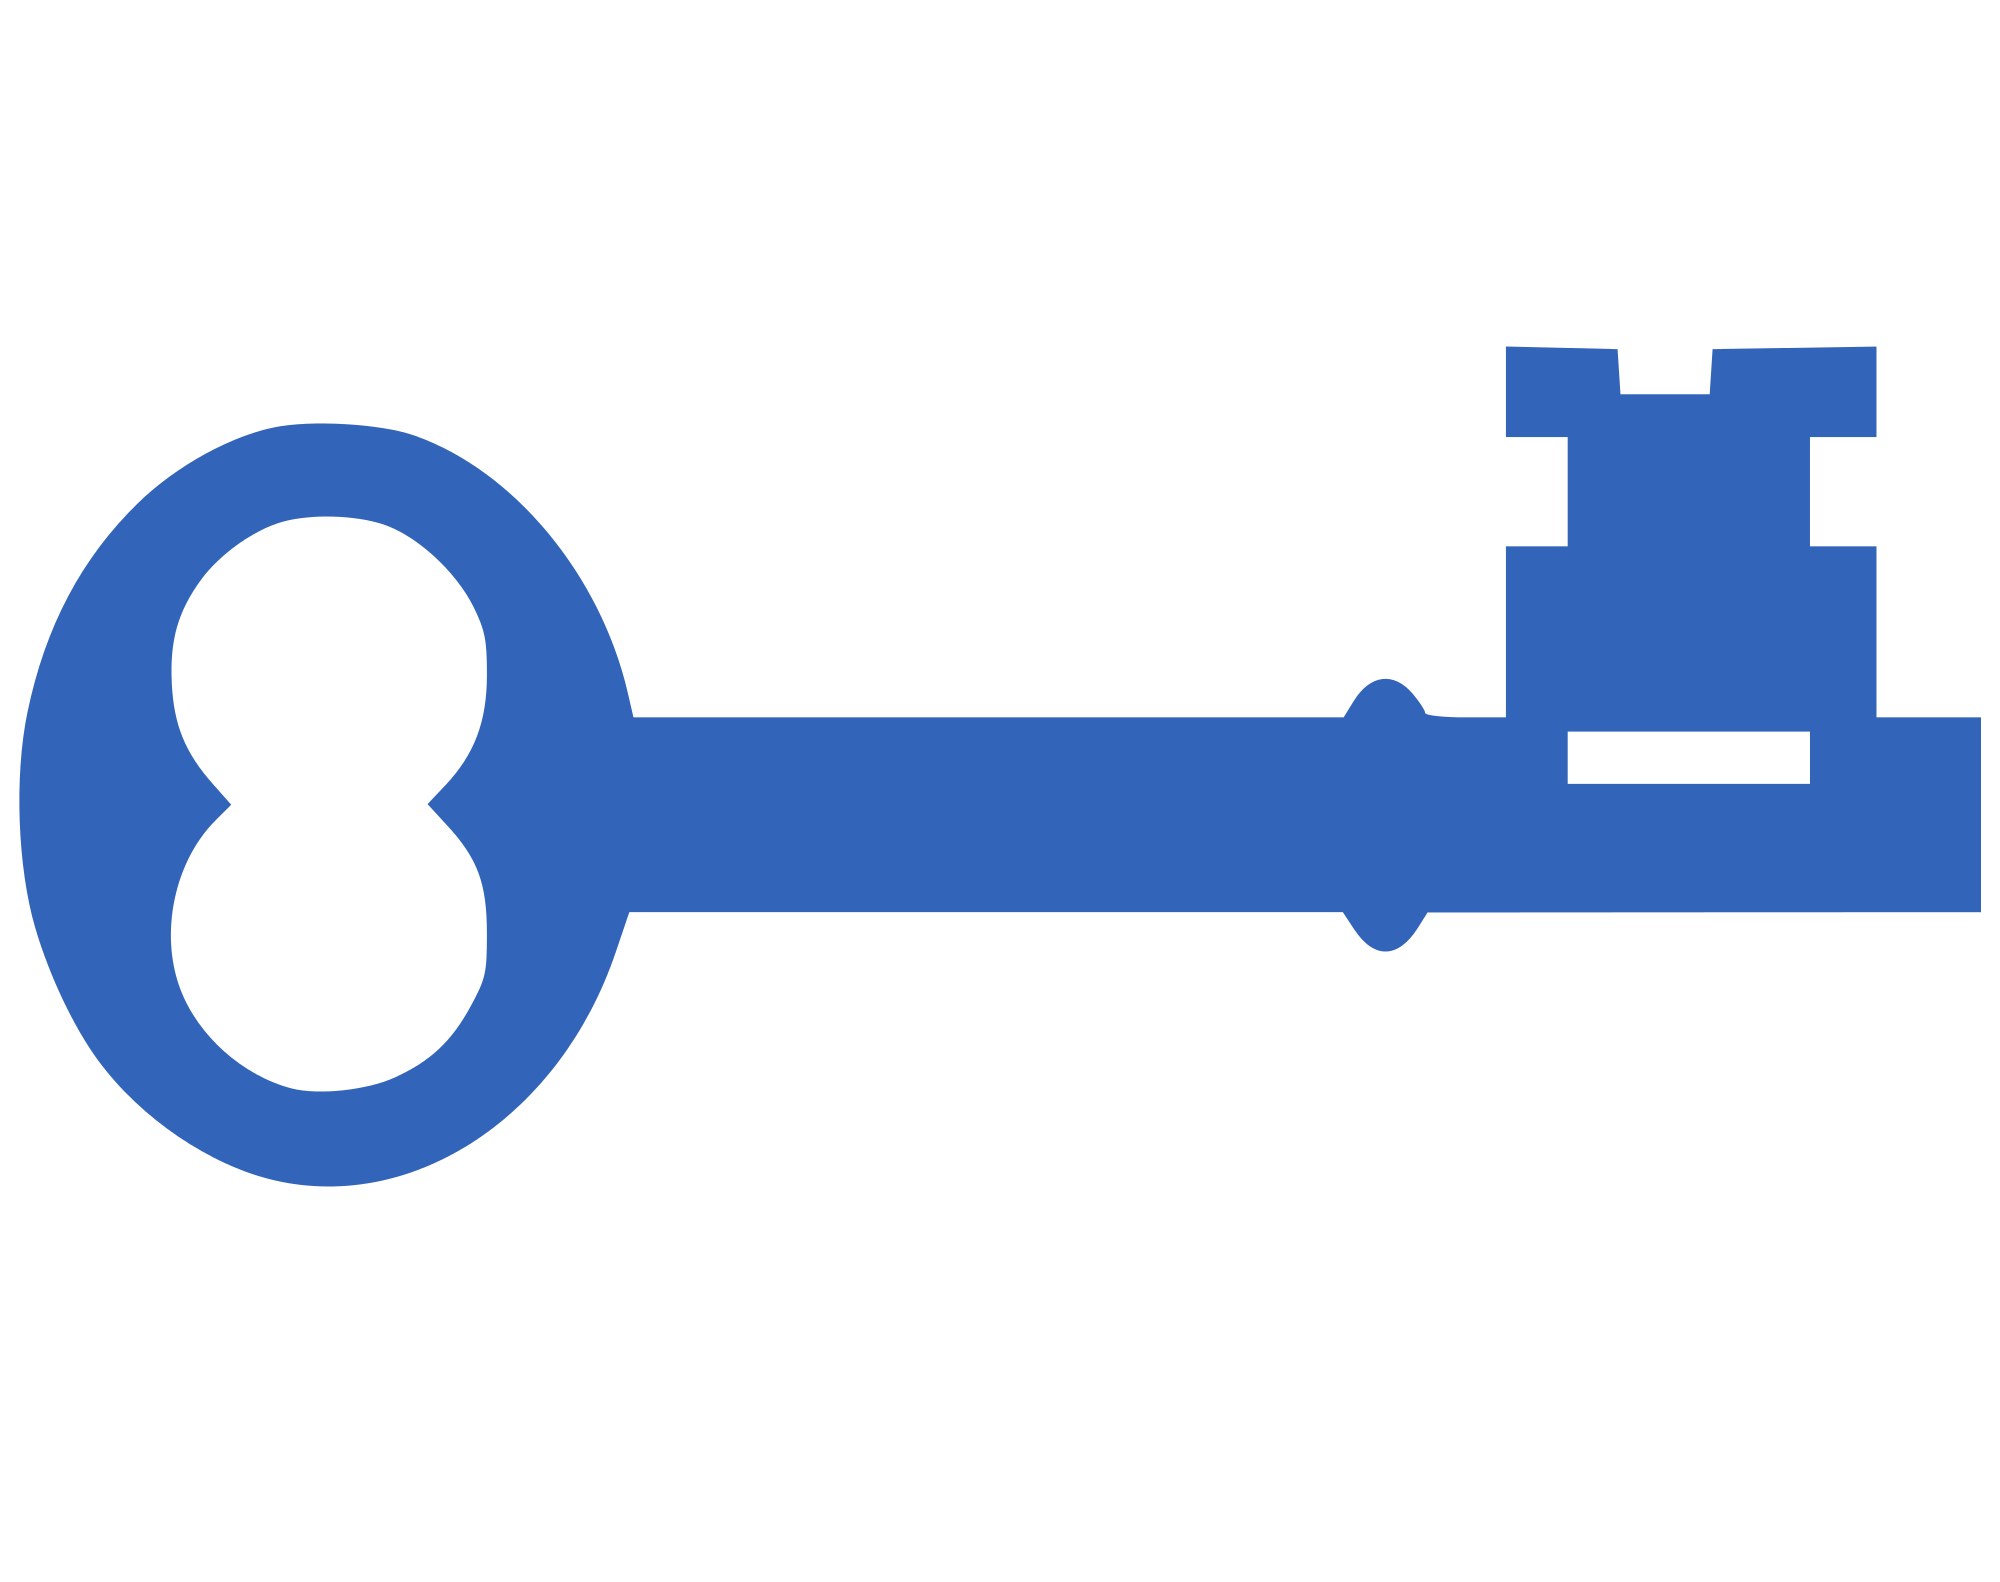 File:IEG blue key.svg - Wikimedia Commons